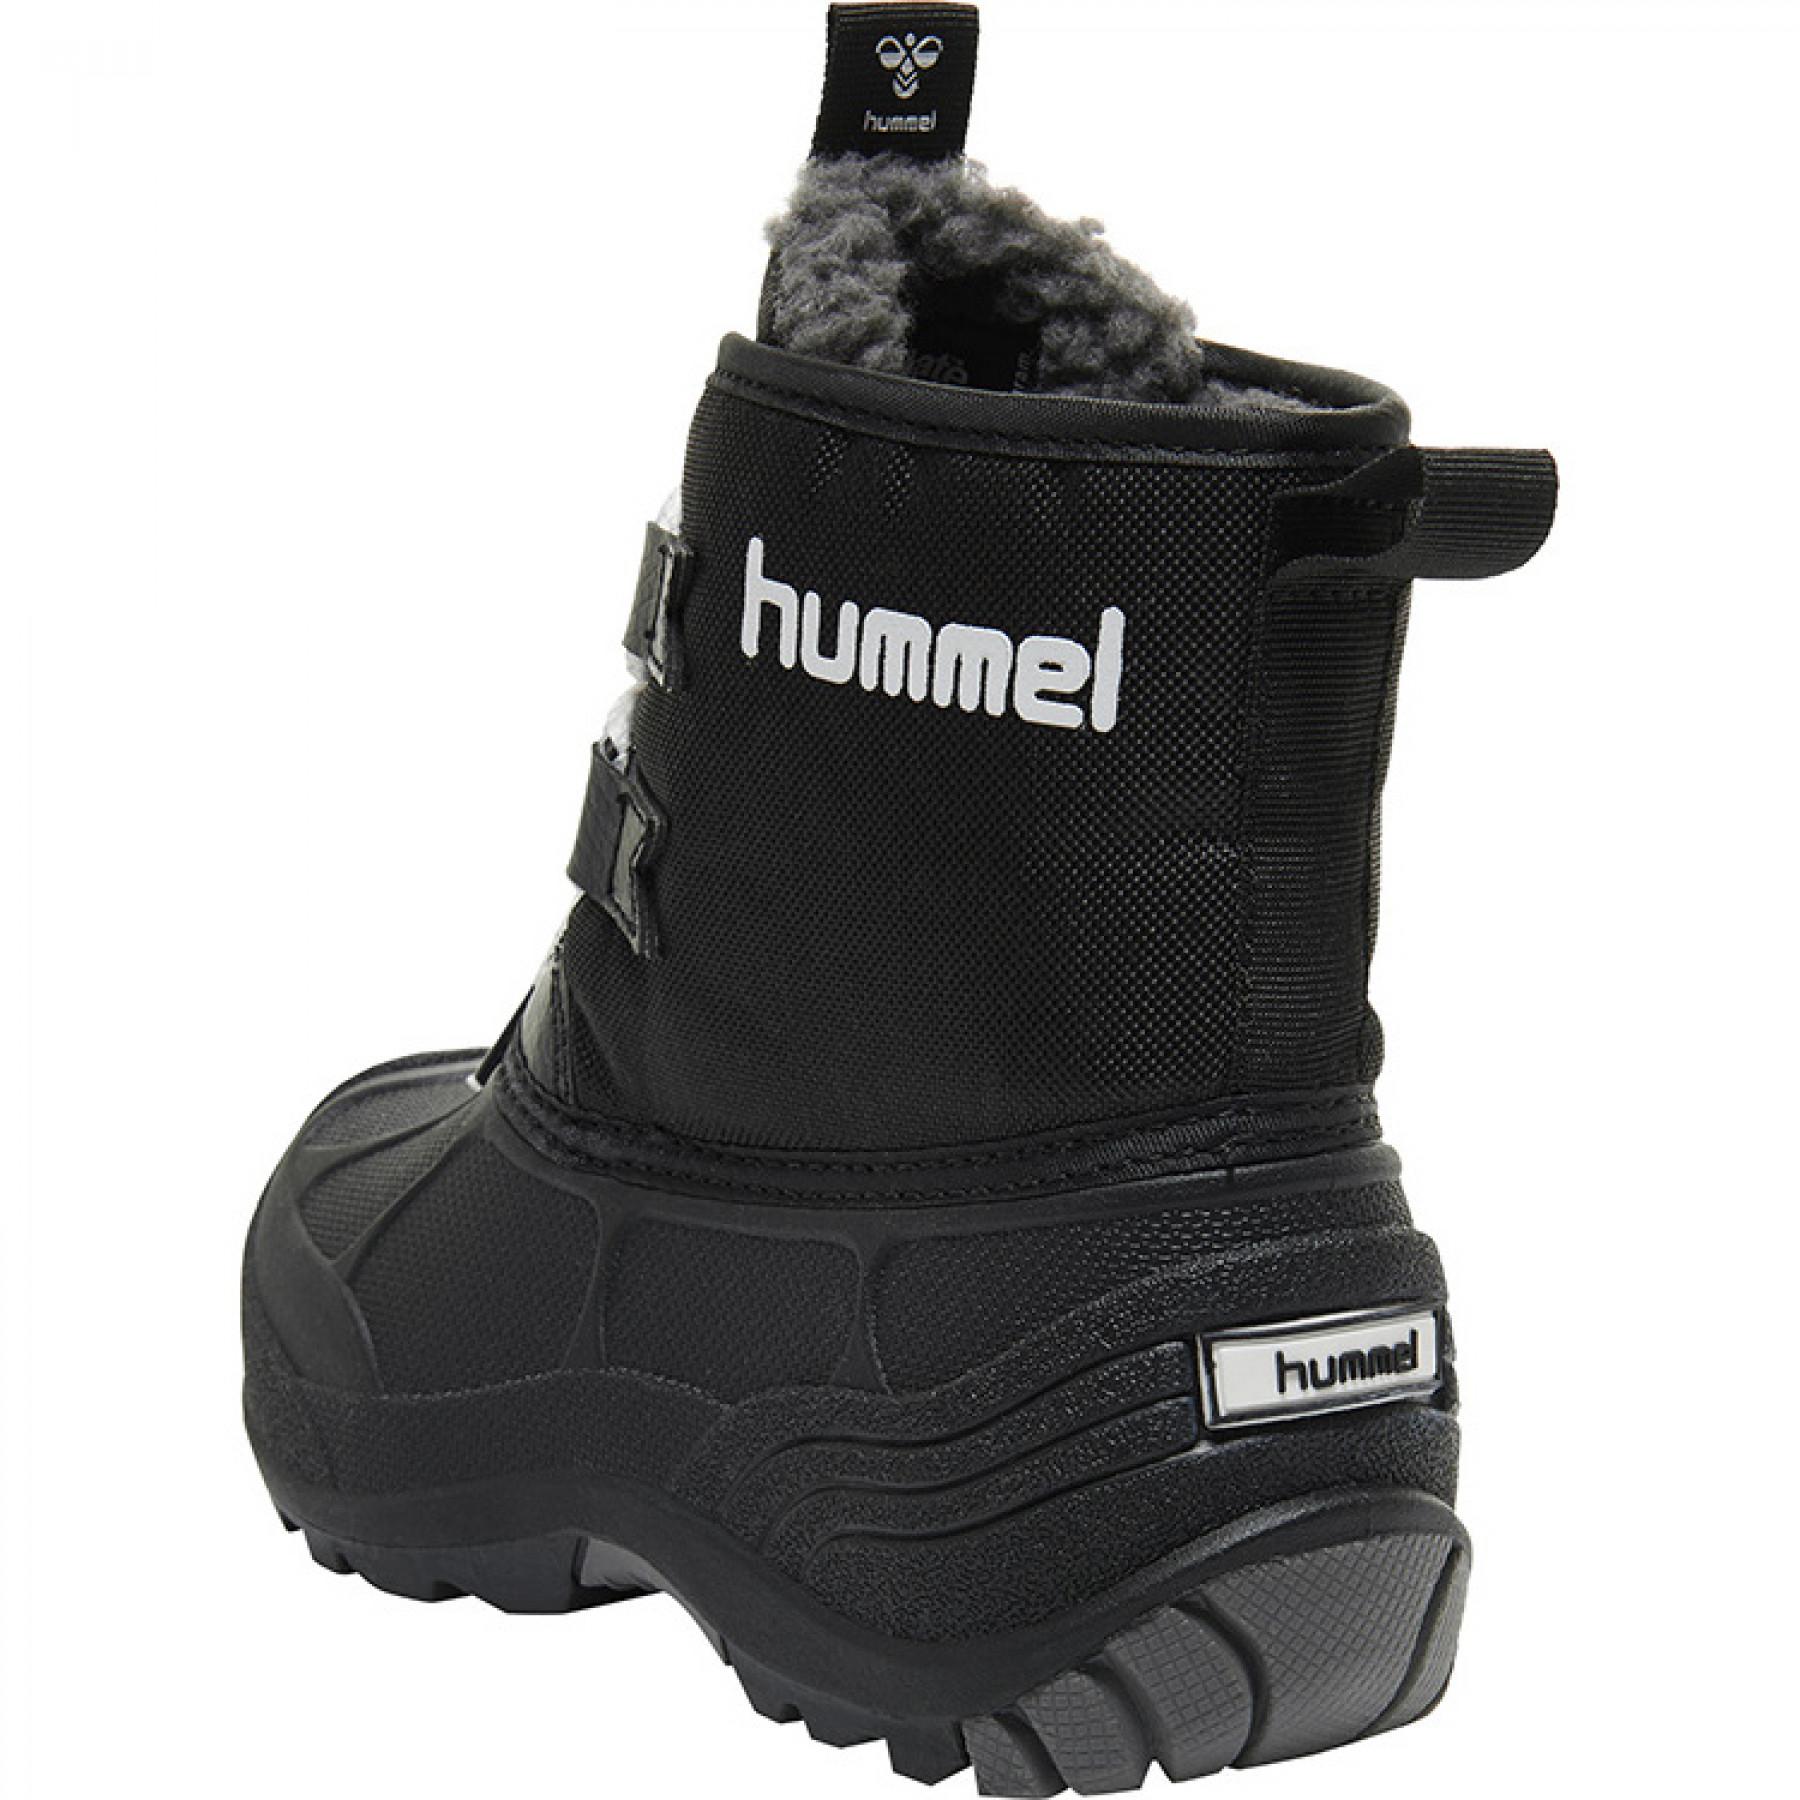 Children's sneakers Hummel icicle low